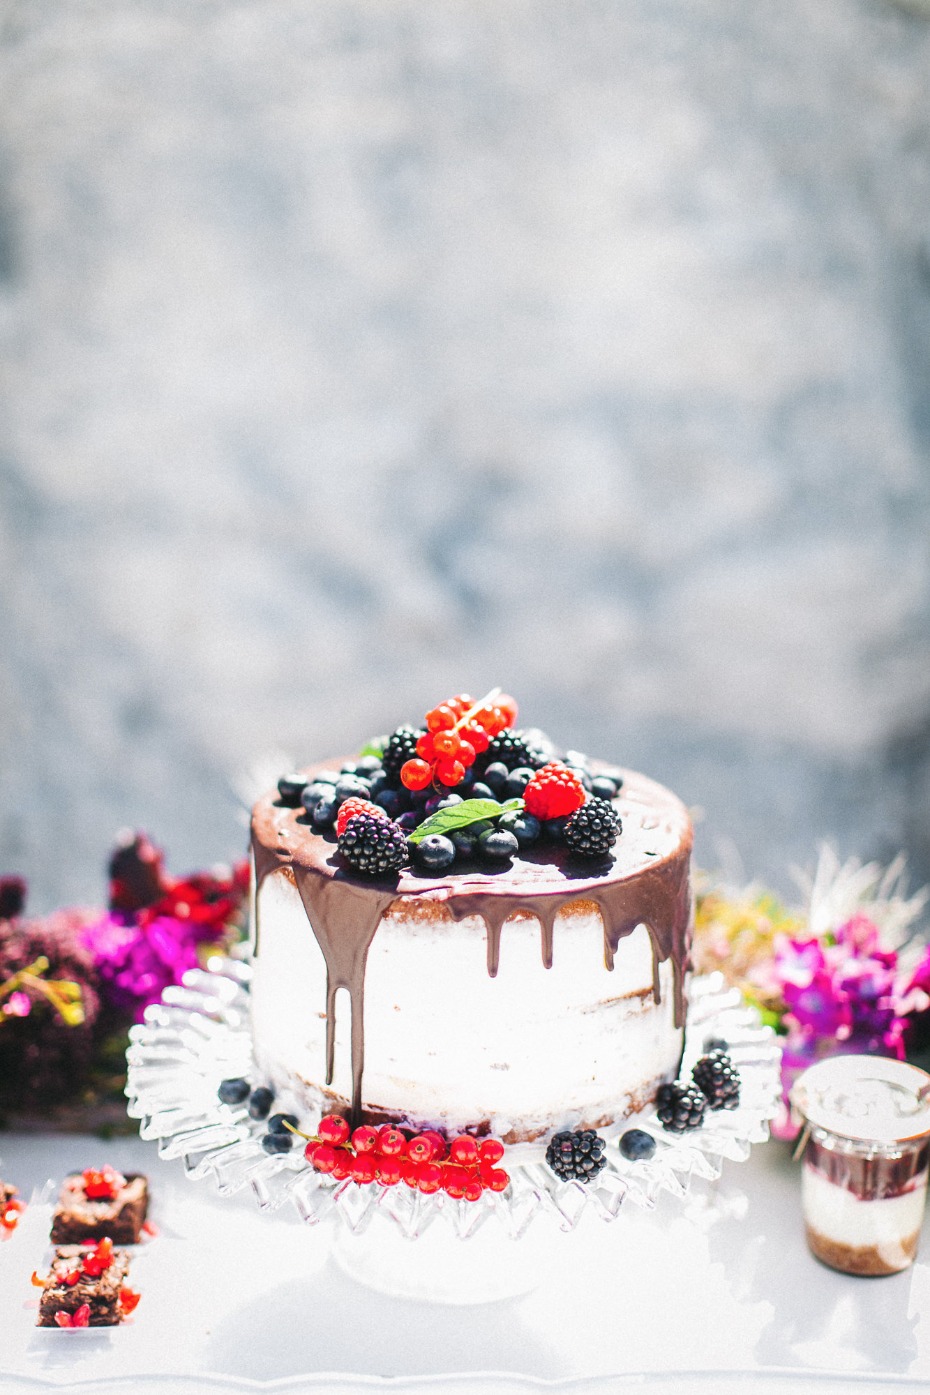 Berry chocolate drop naked cake